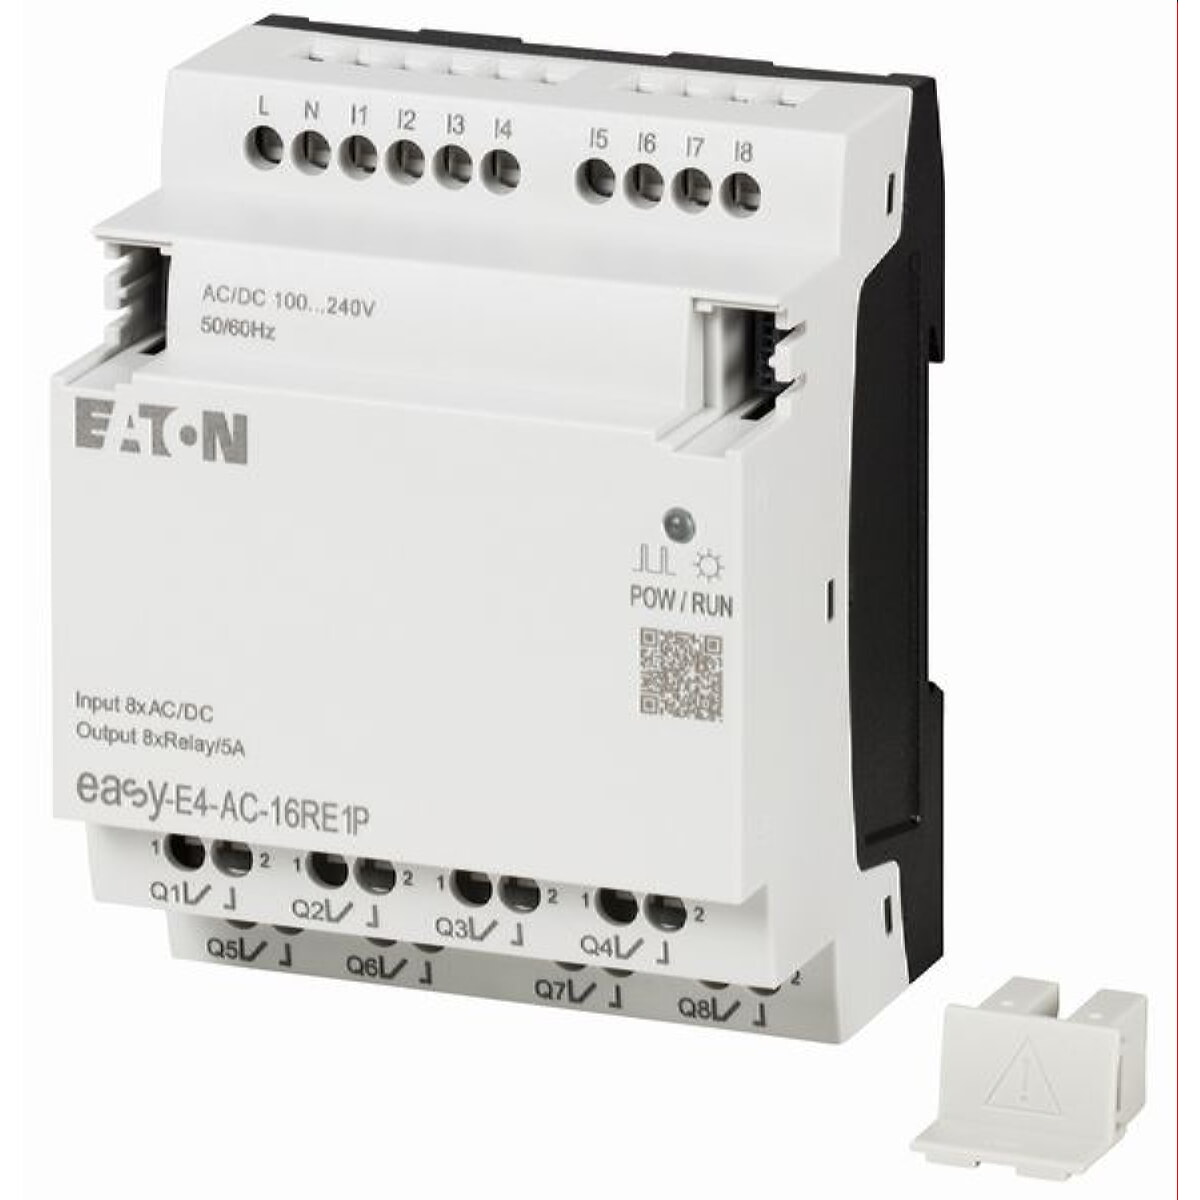 Eaton Electric Erweiterung EASY-E4-AC-16RE1P für easyE4